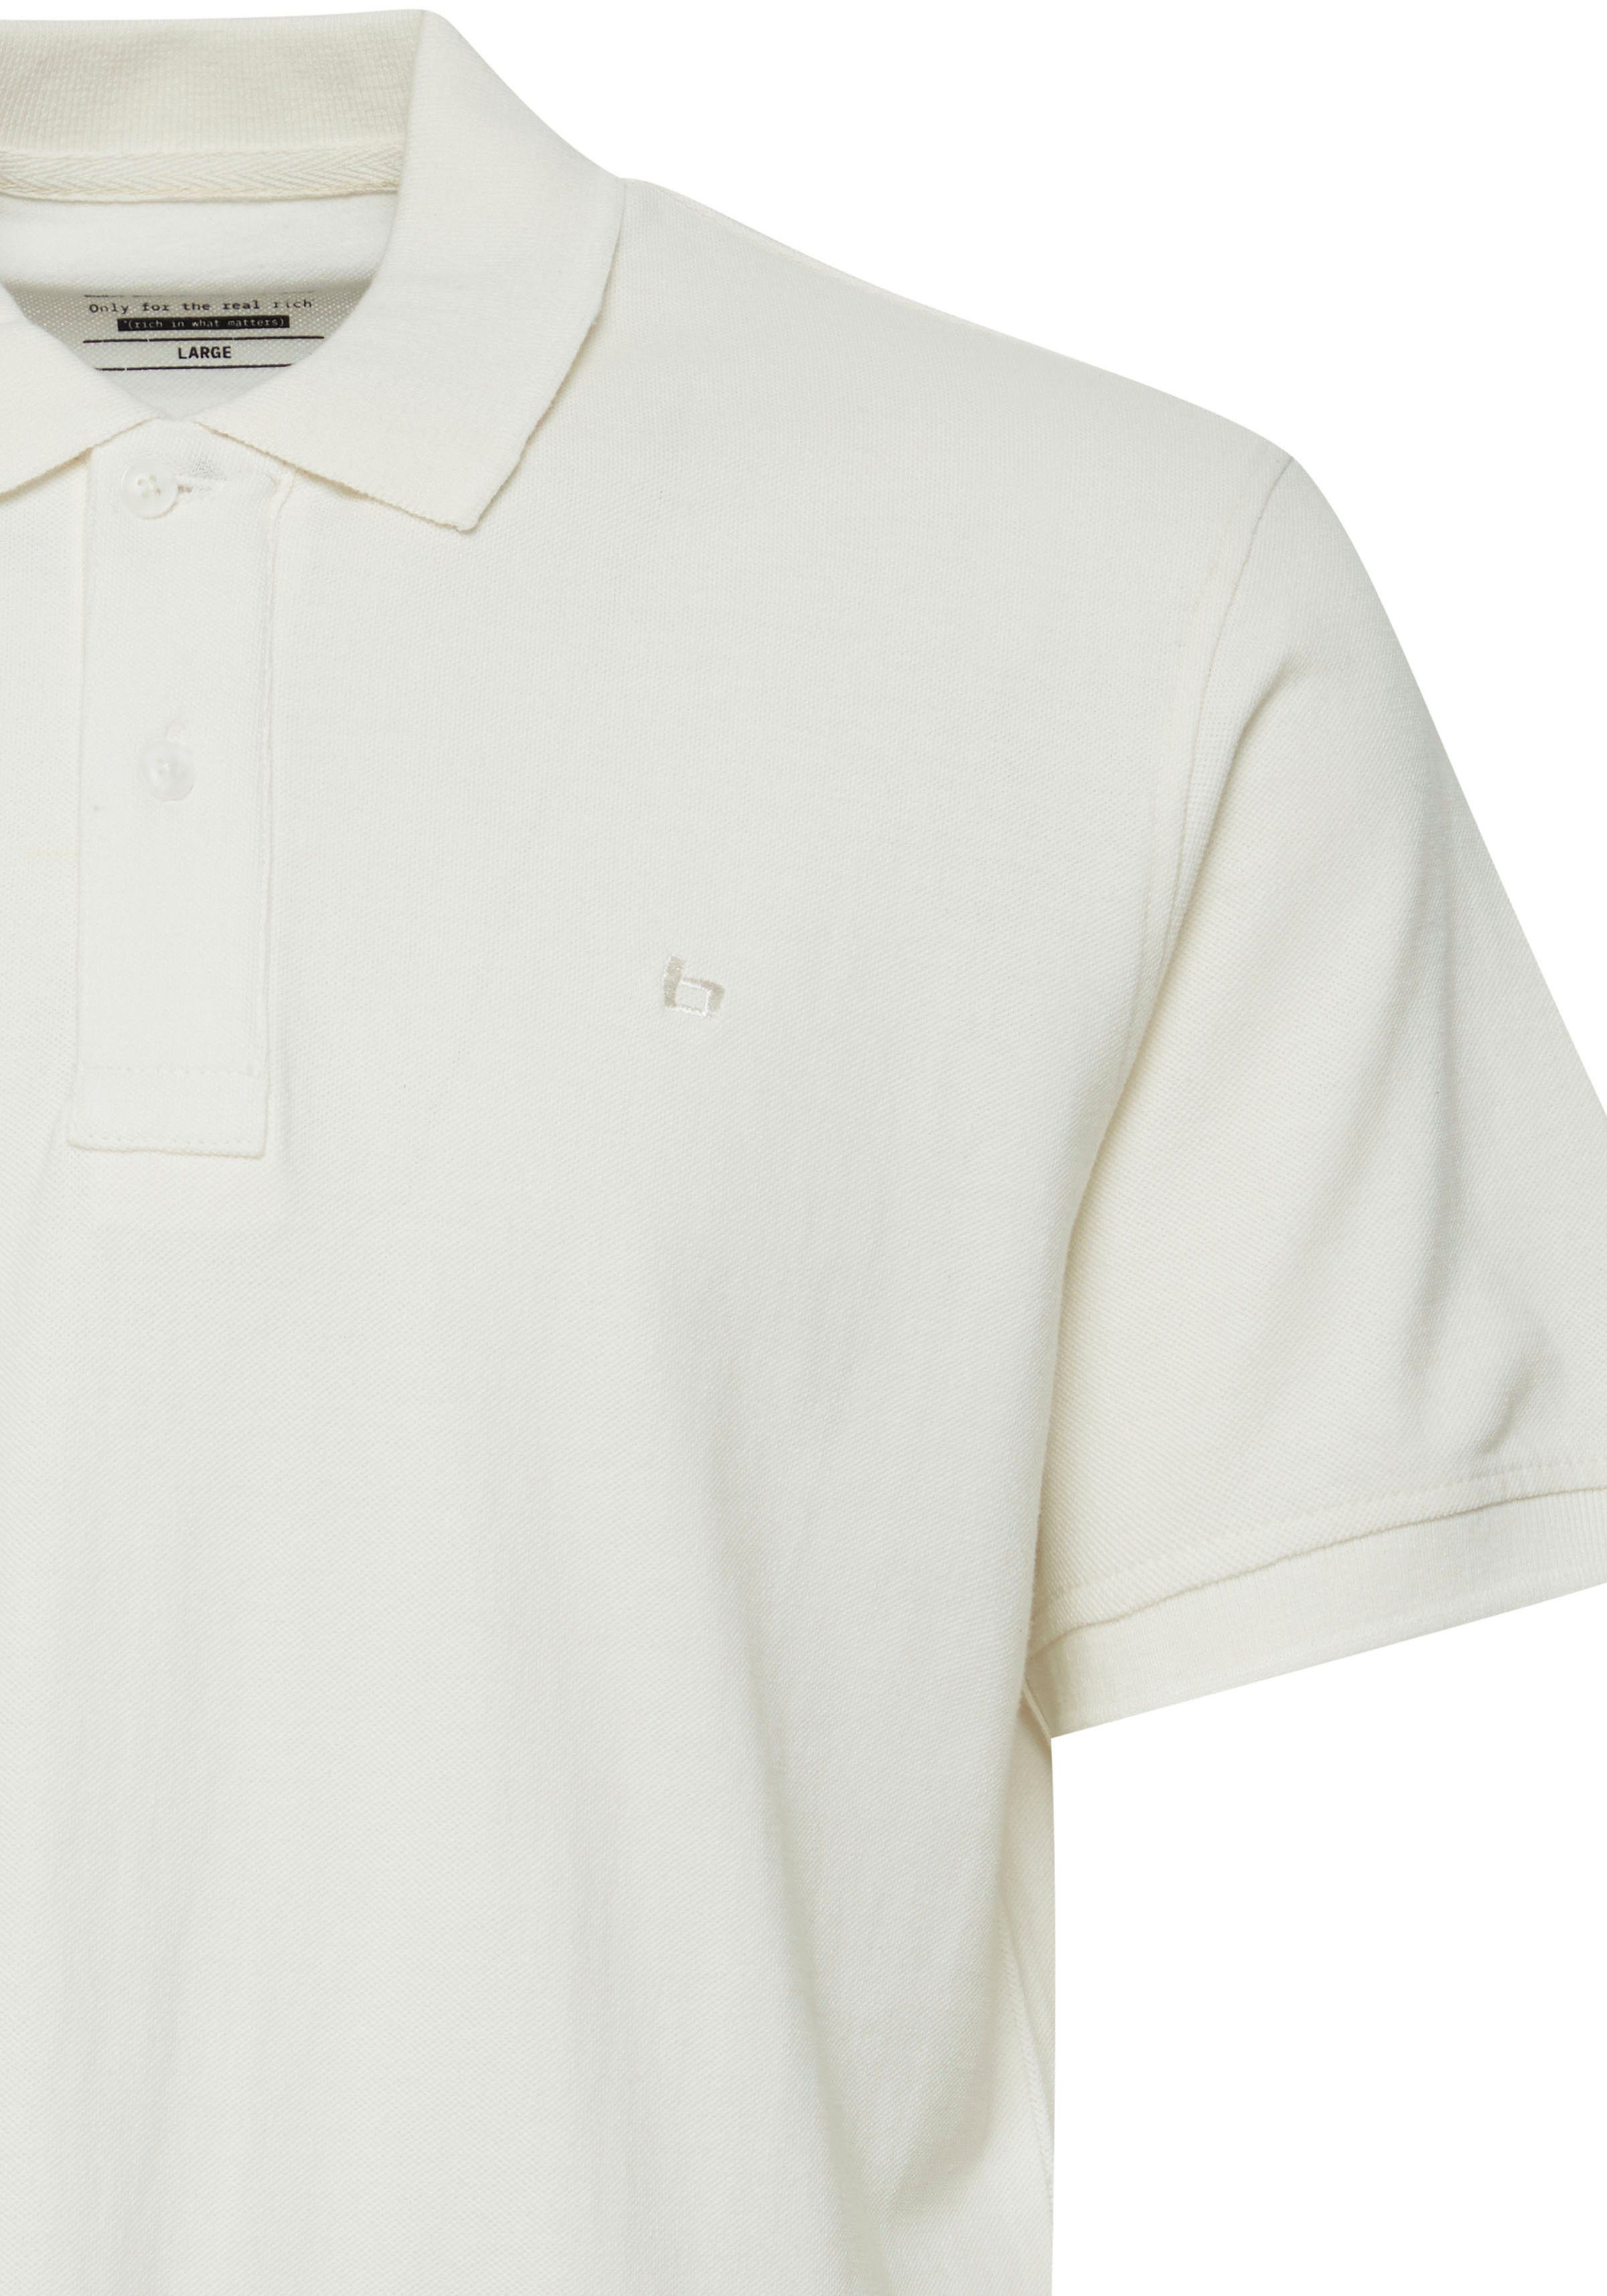 Blend Poloshirt white BL-Poloshirt